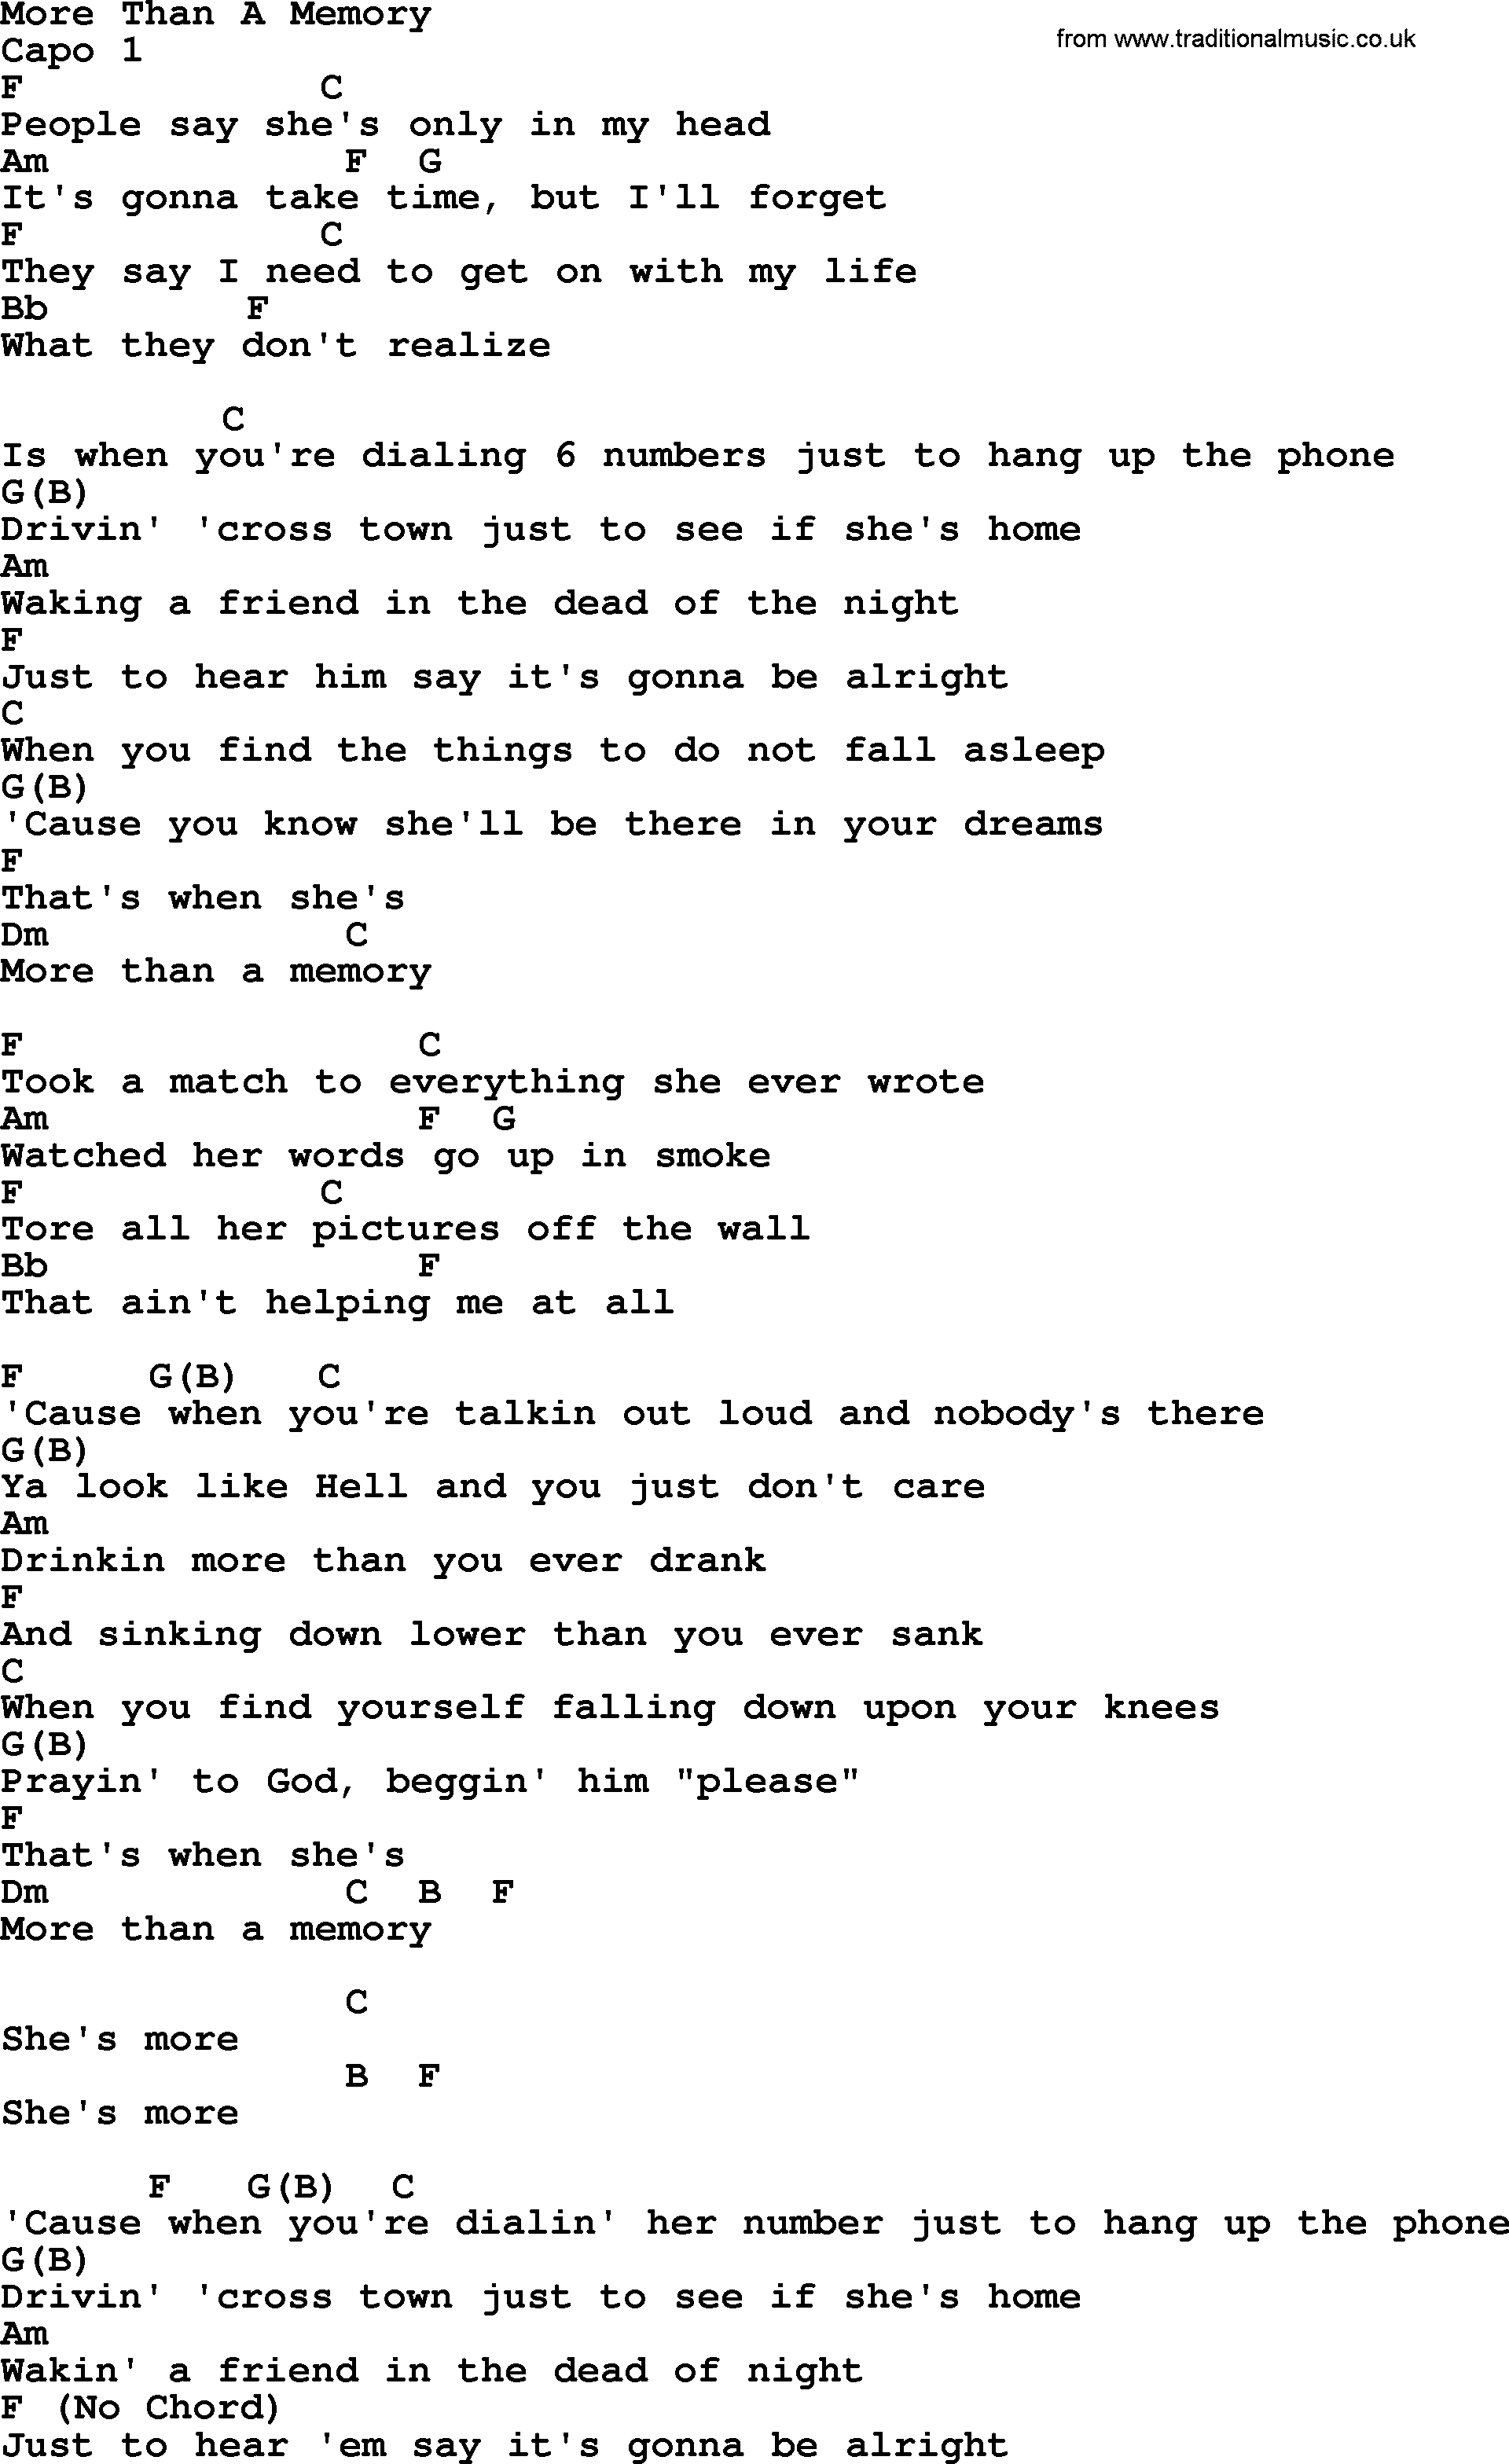 Garth Brooks song: More Than A Memory, lyrics and chords